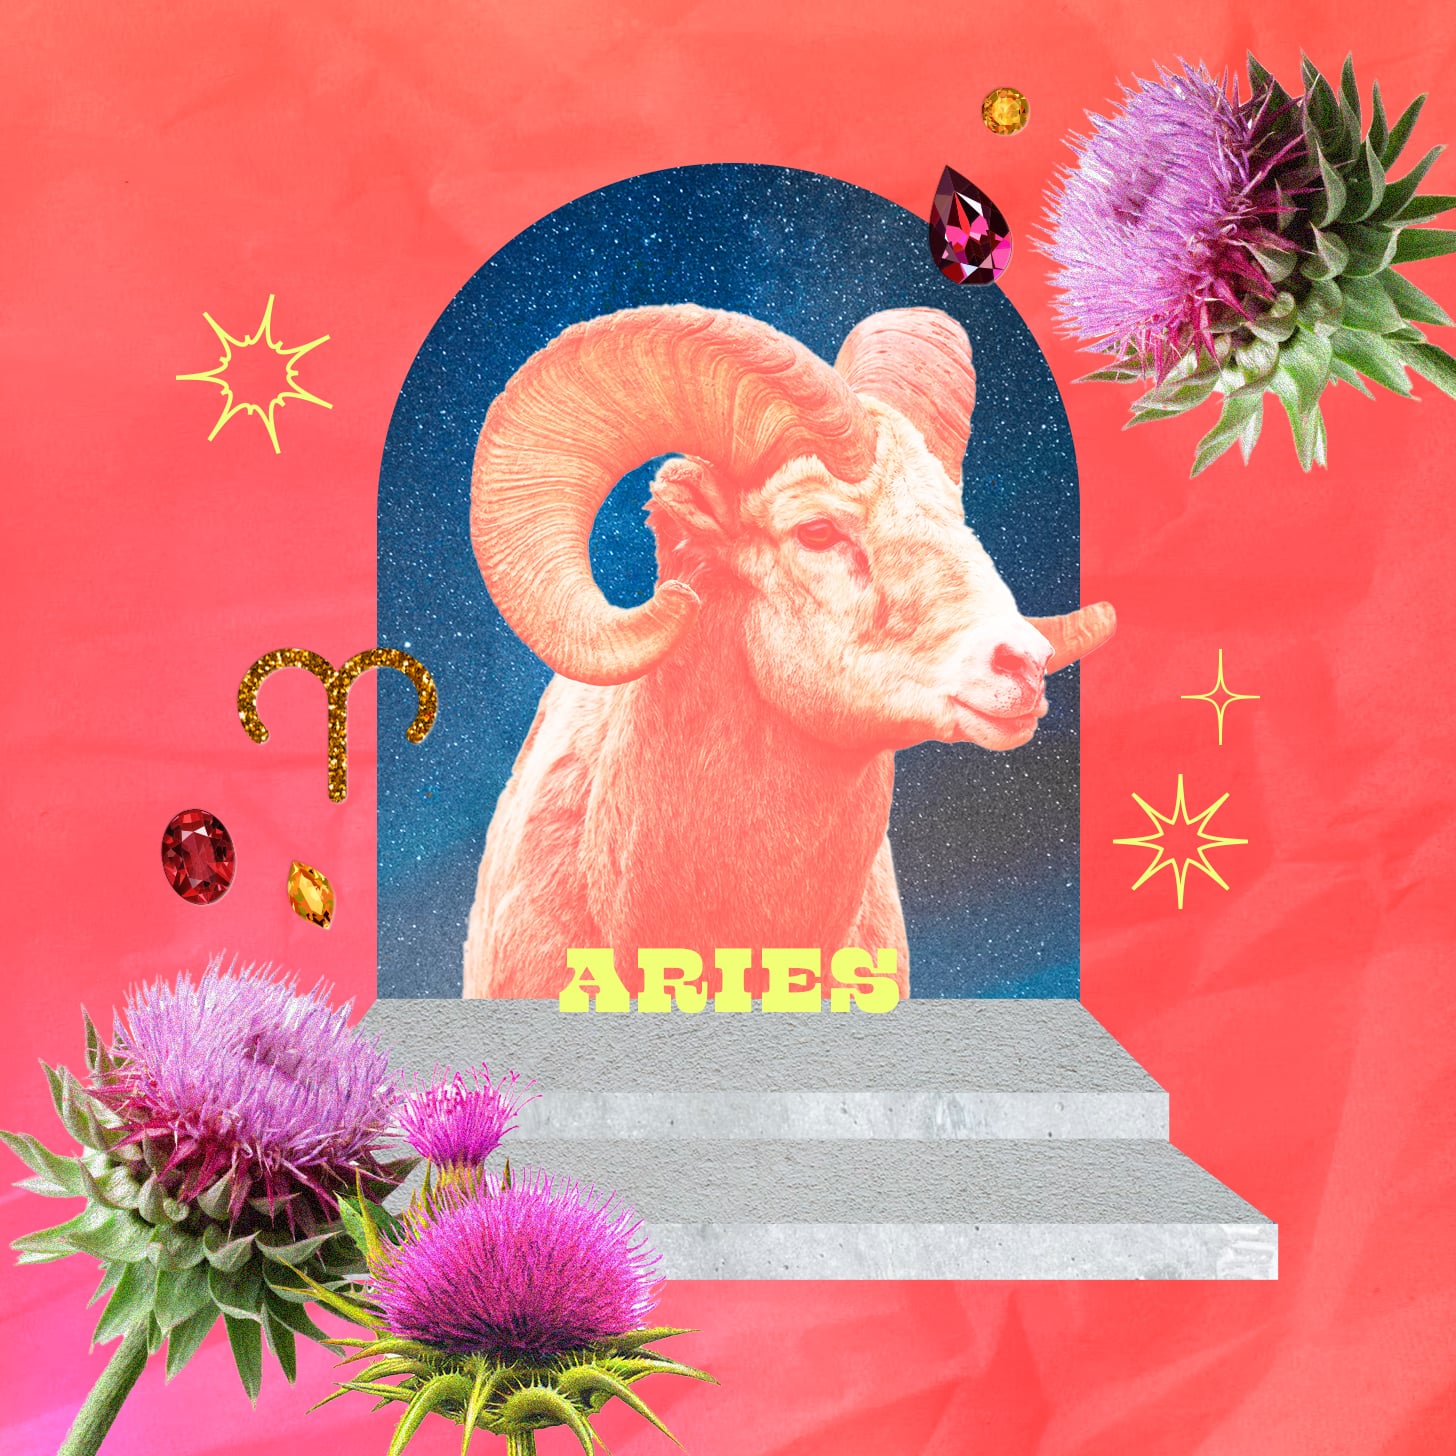 Aries weekly horoscope for November 6, 2022